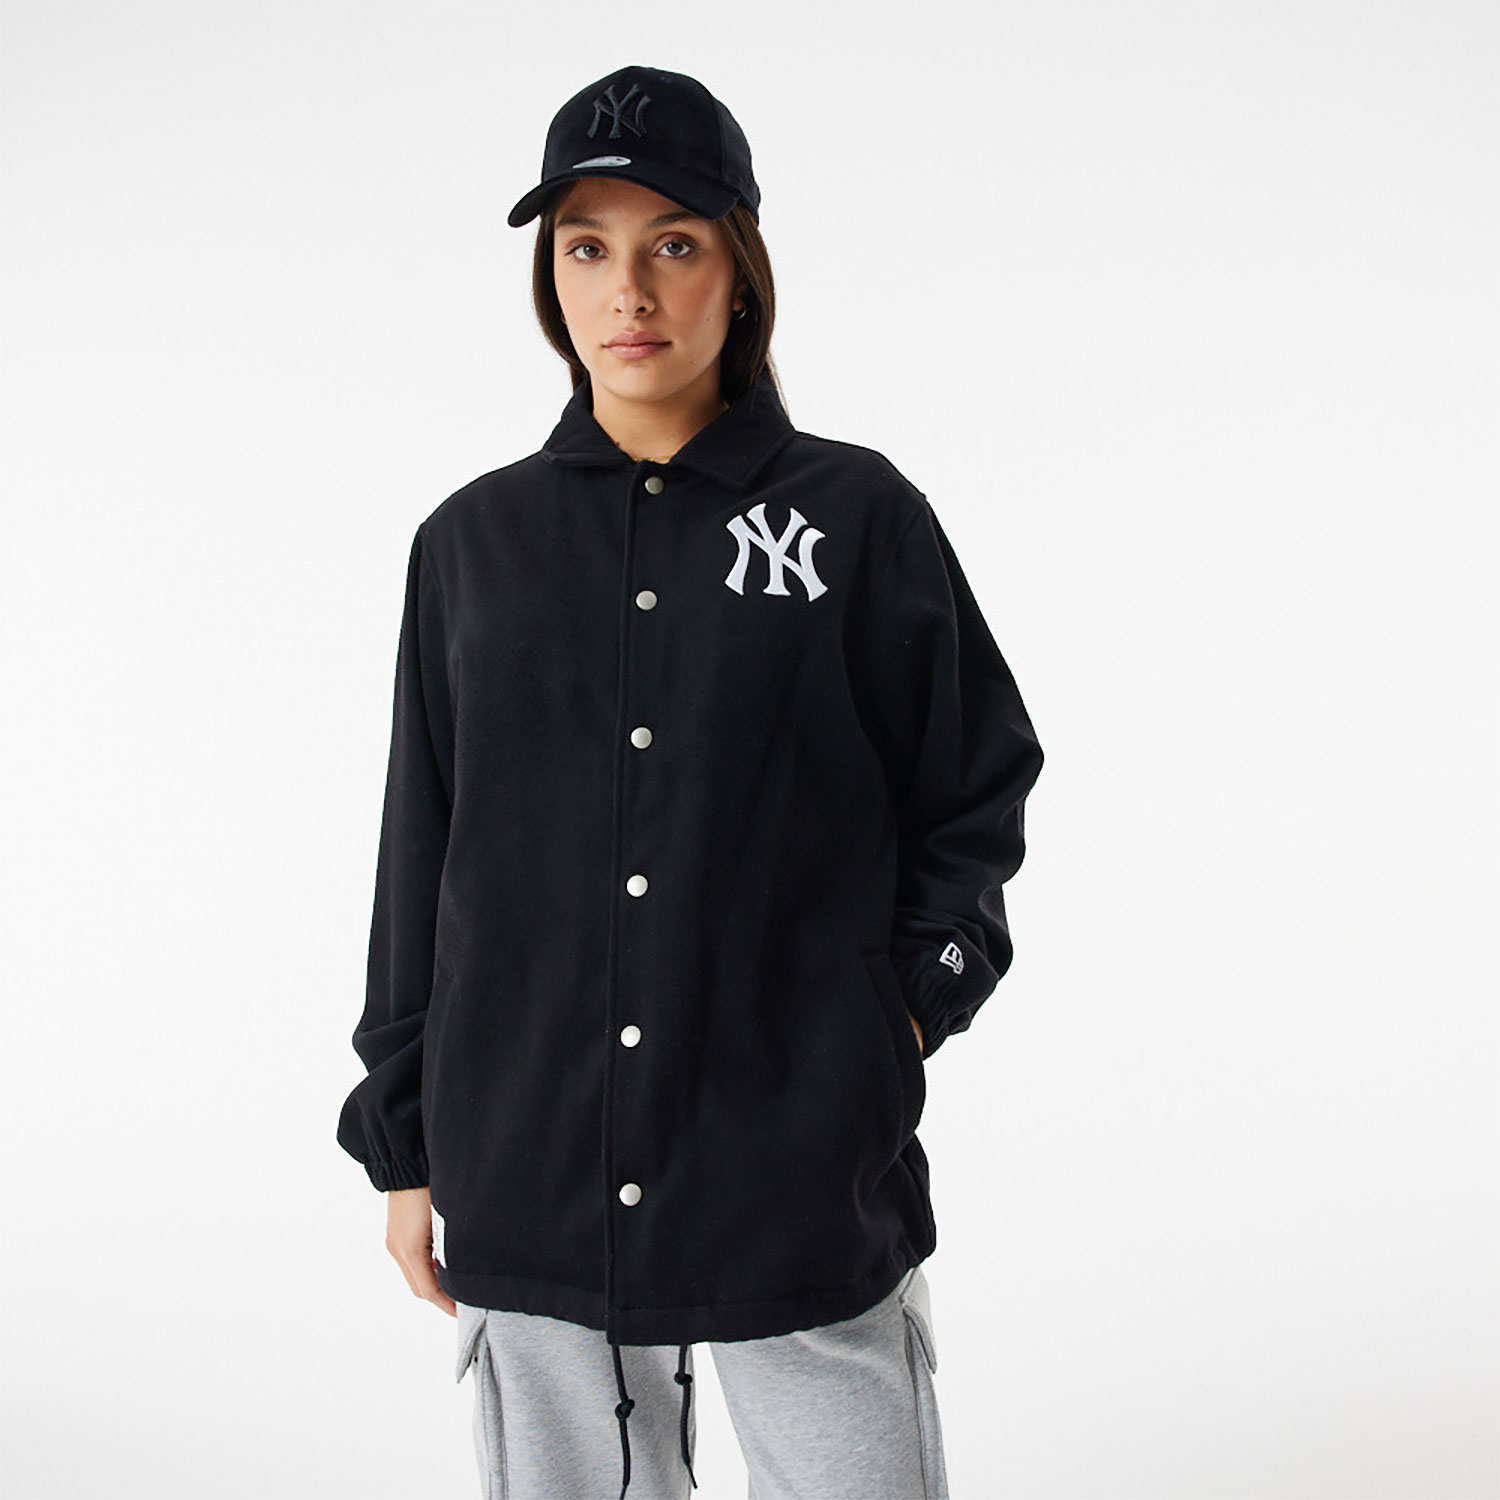 New York Yankees MLB Black Coaches Jacket